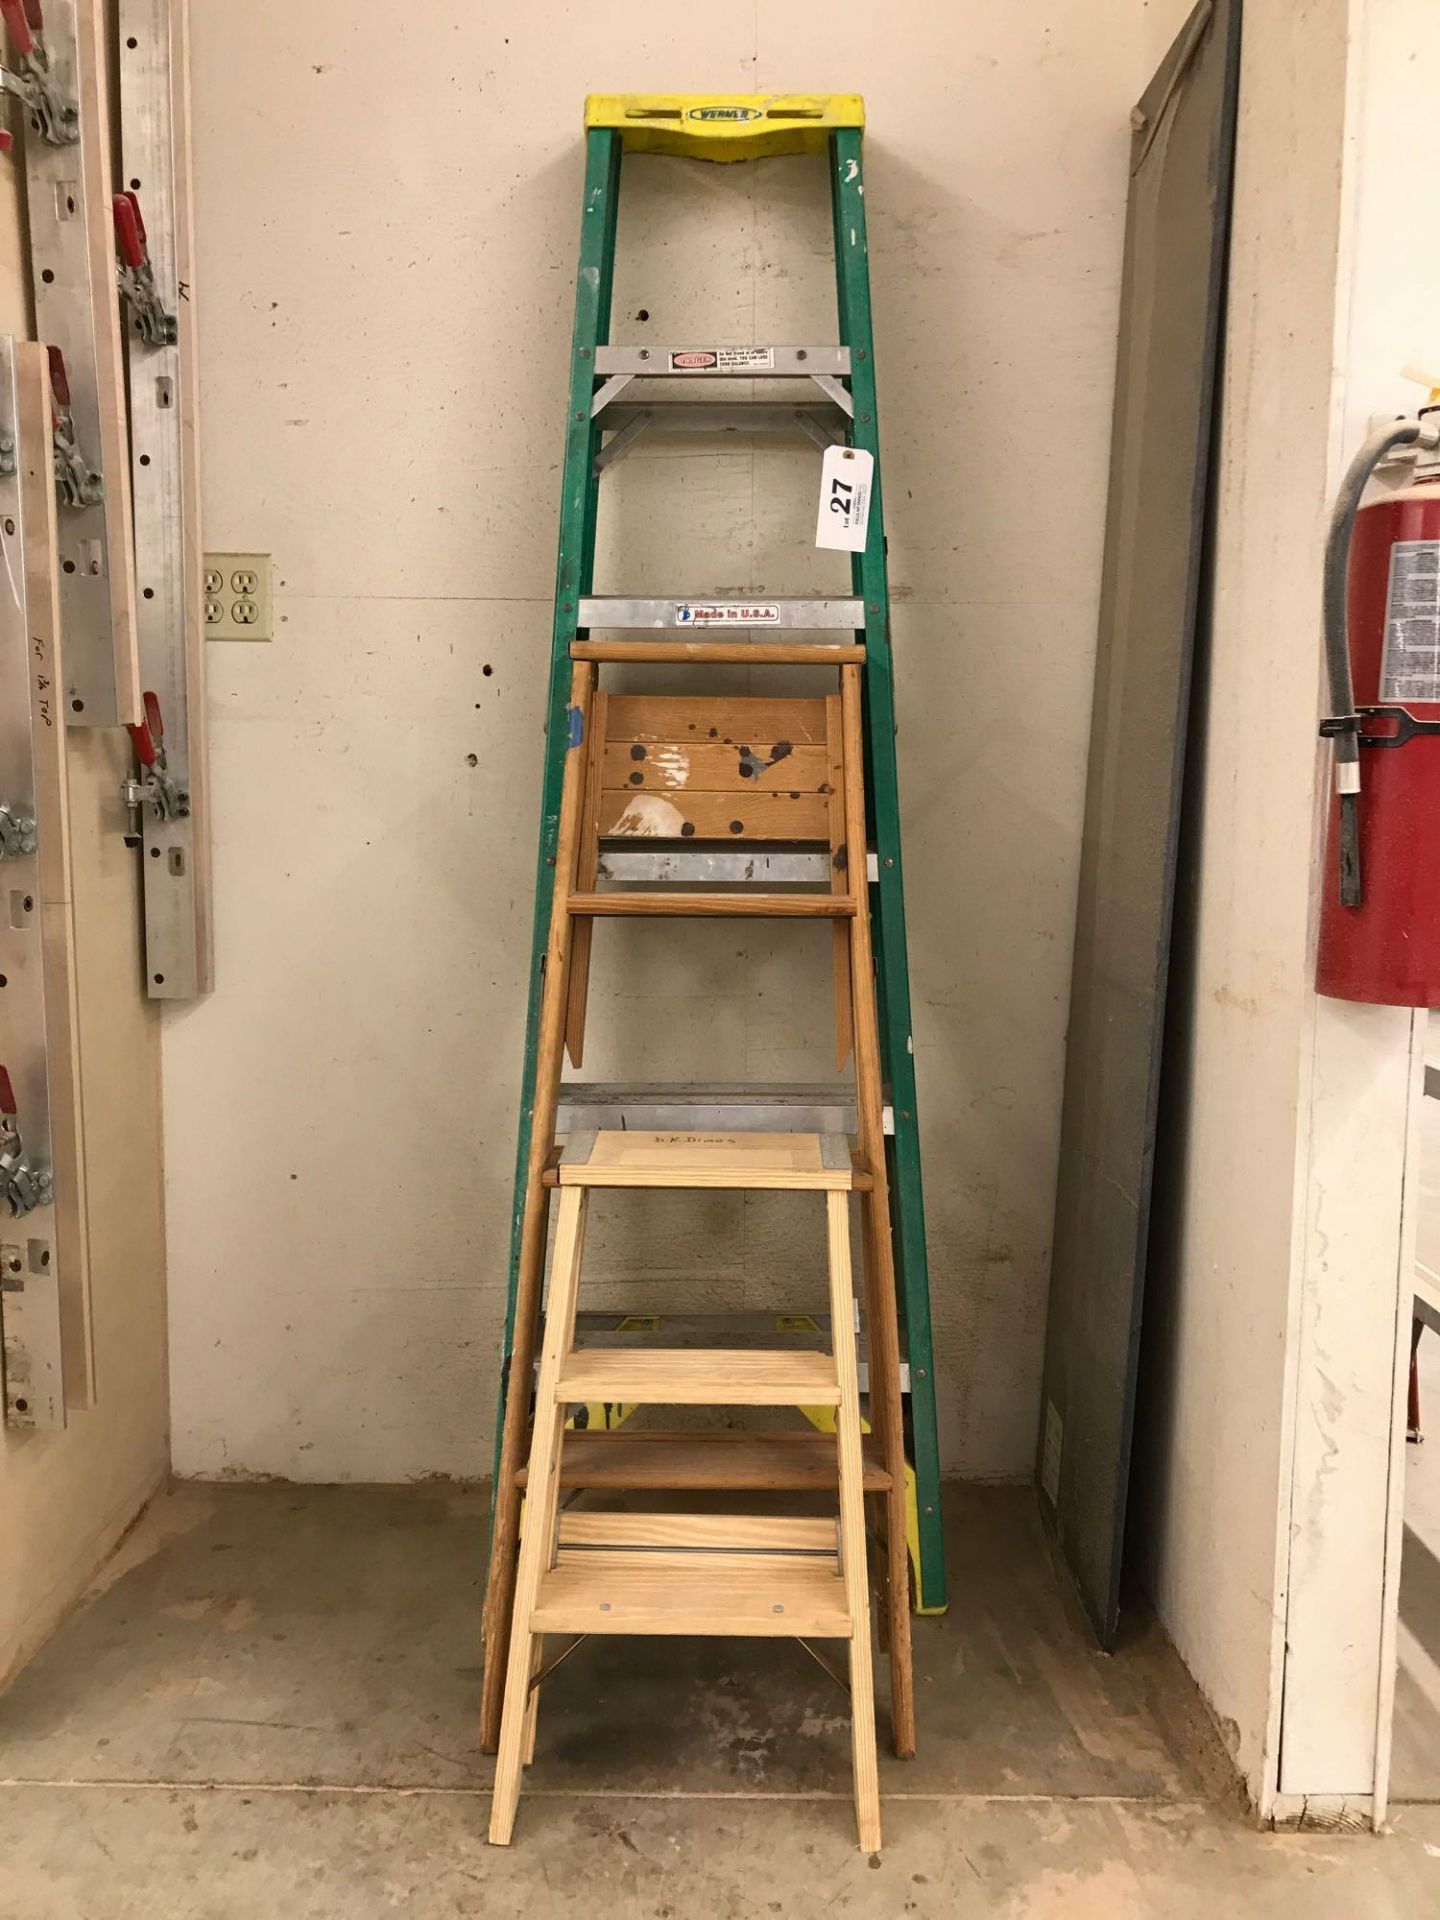 3 Step ladders